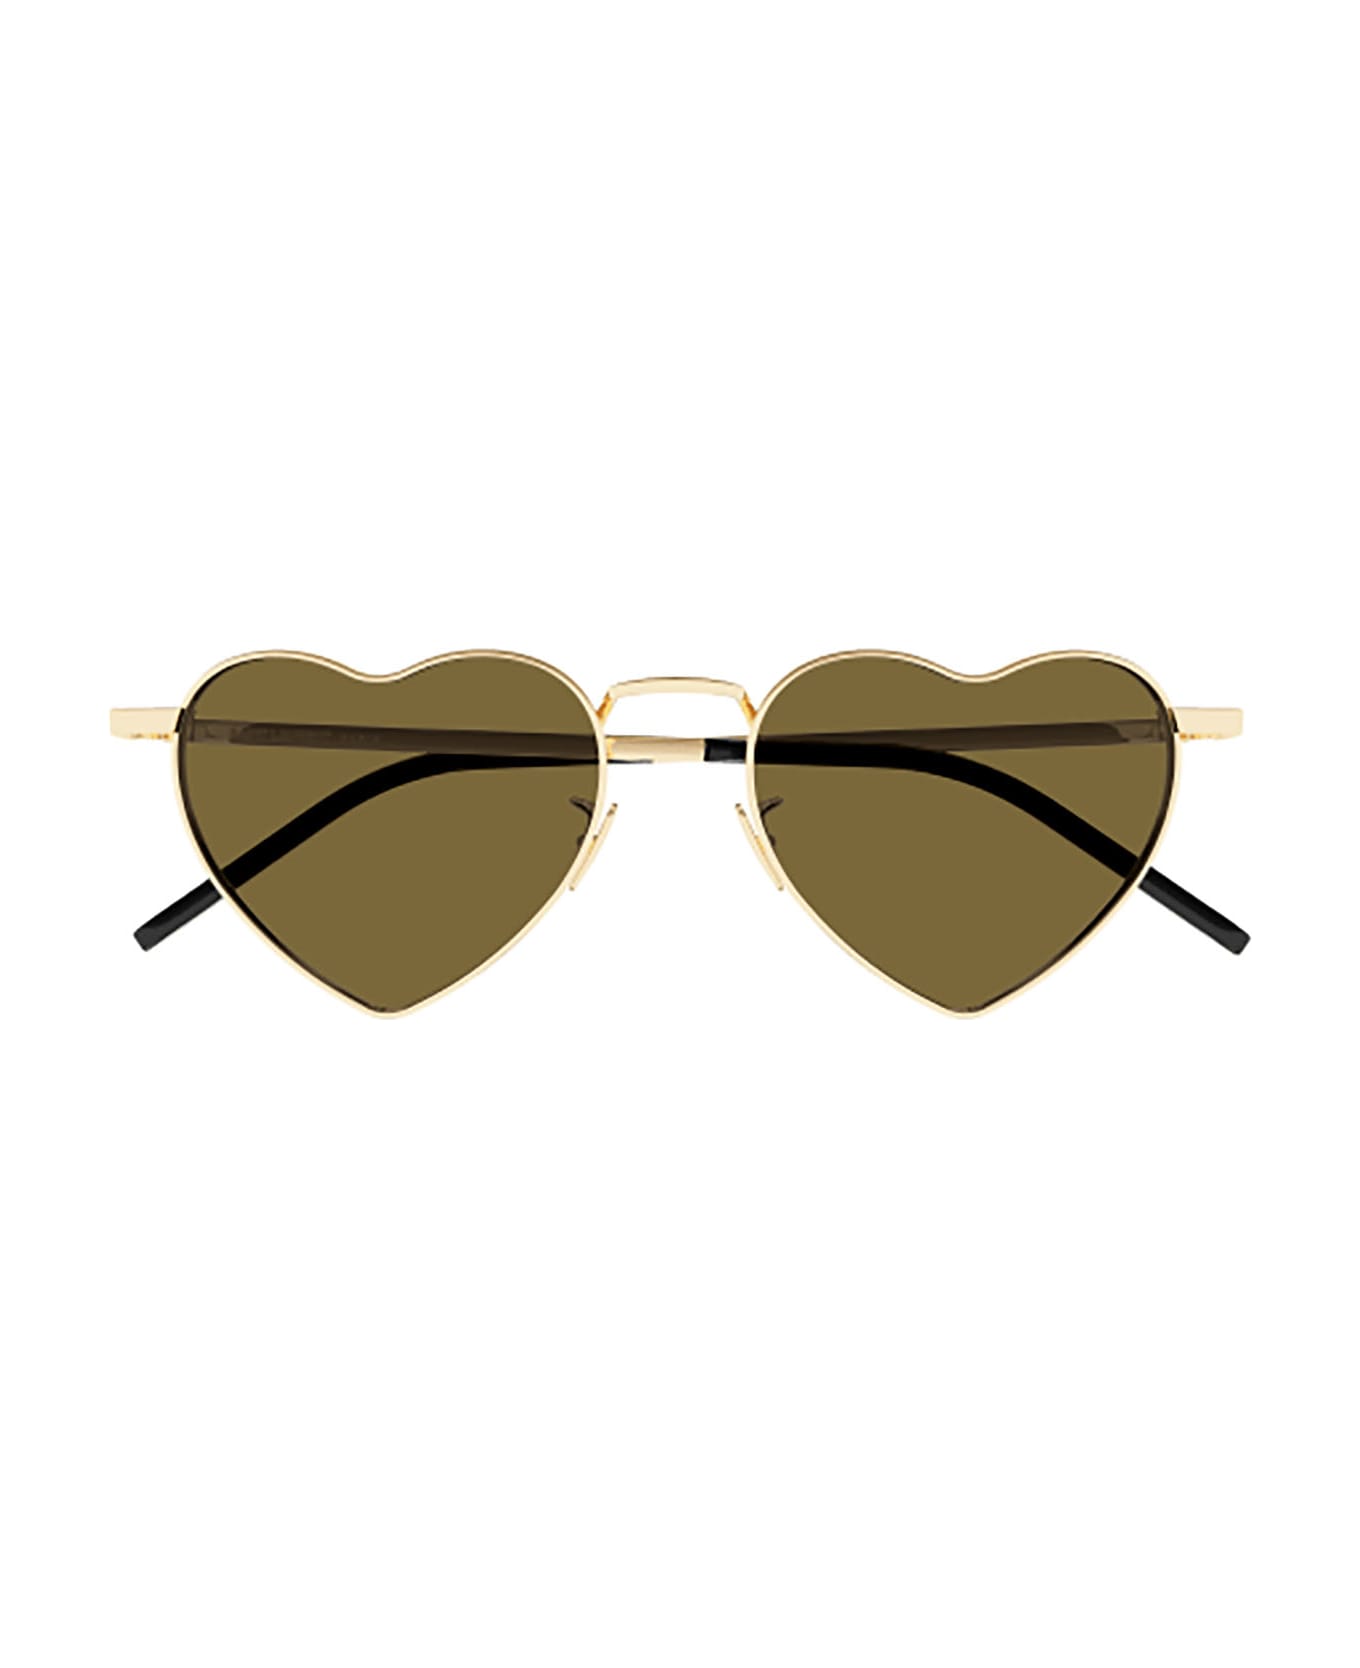 Saint Laurent Eyewear Sl 301 Loulou Sunglasses - 015 gold gold brown